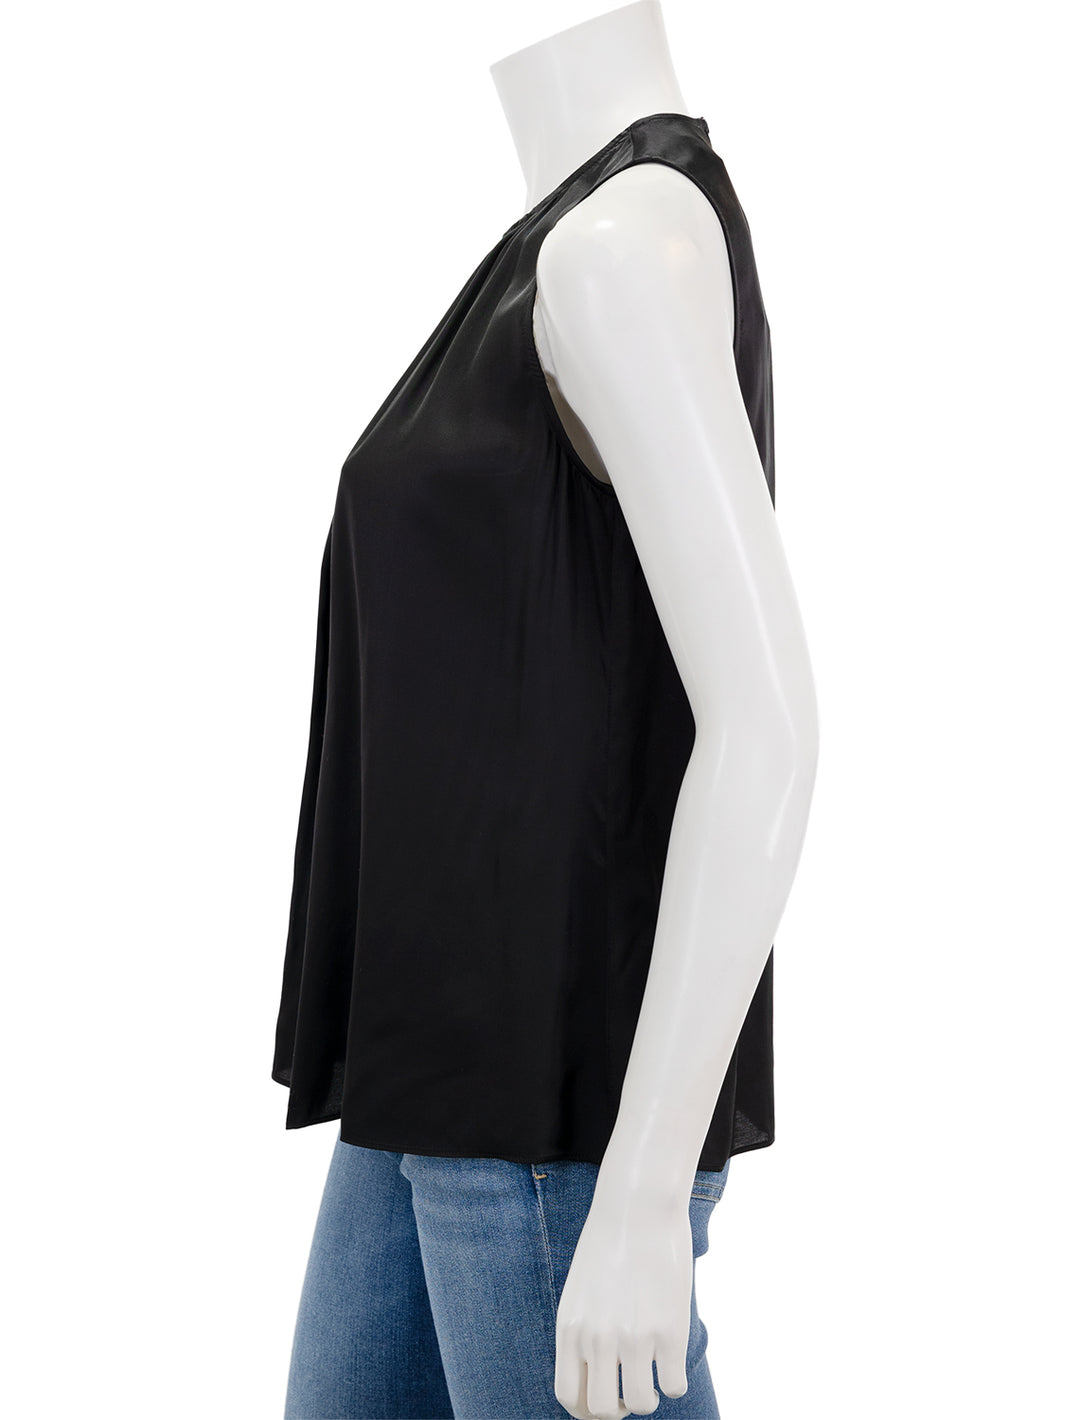 Side view of Saint Art's sadie sleeveless blouse in black.